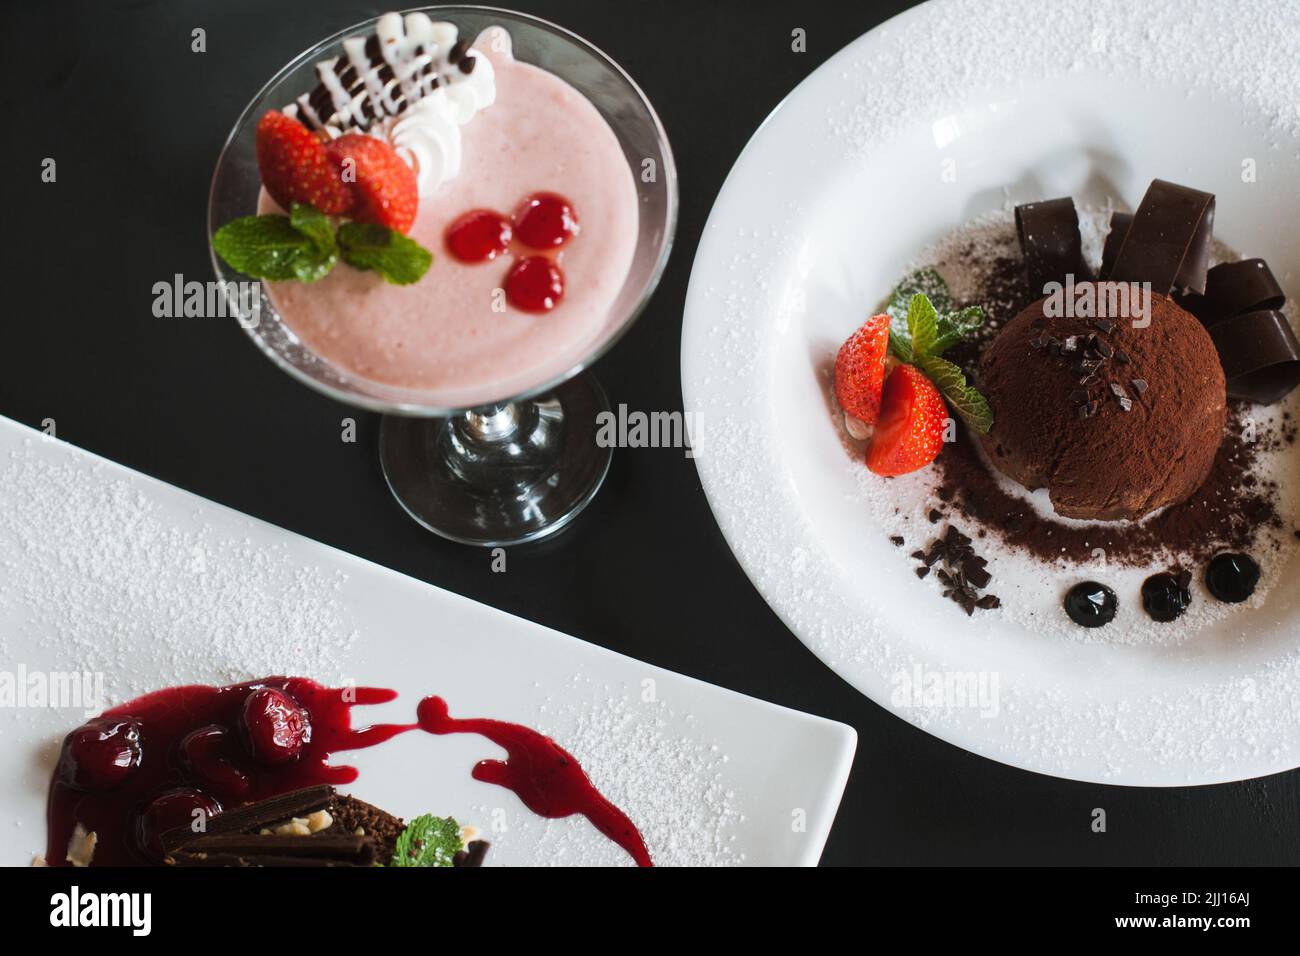 Presentation of delicious desserts in restaurant Stock Photo